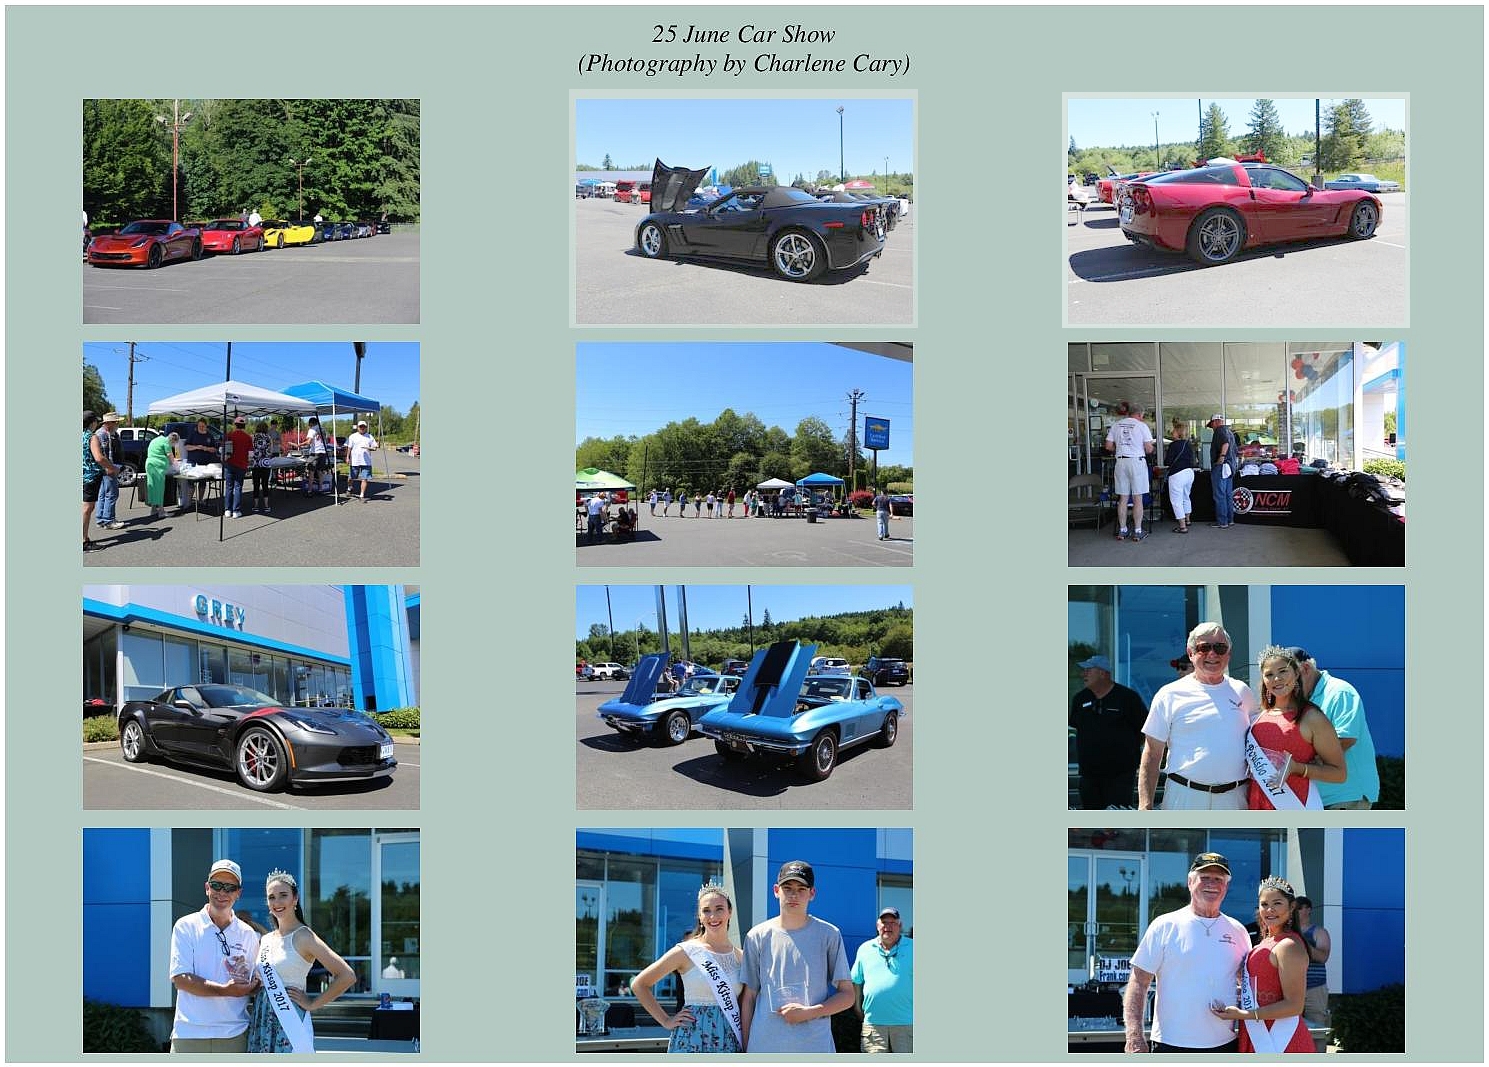 GOCC/imgs/25 June Car Show-page-001.jpg